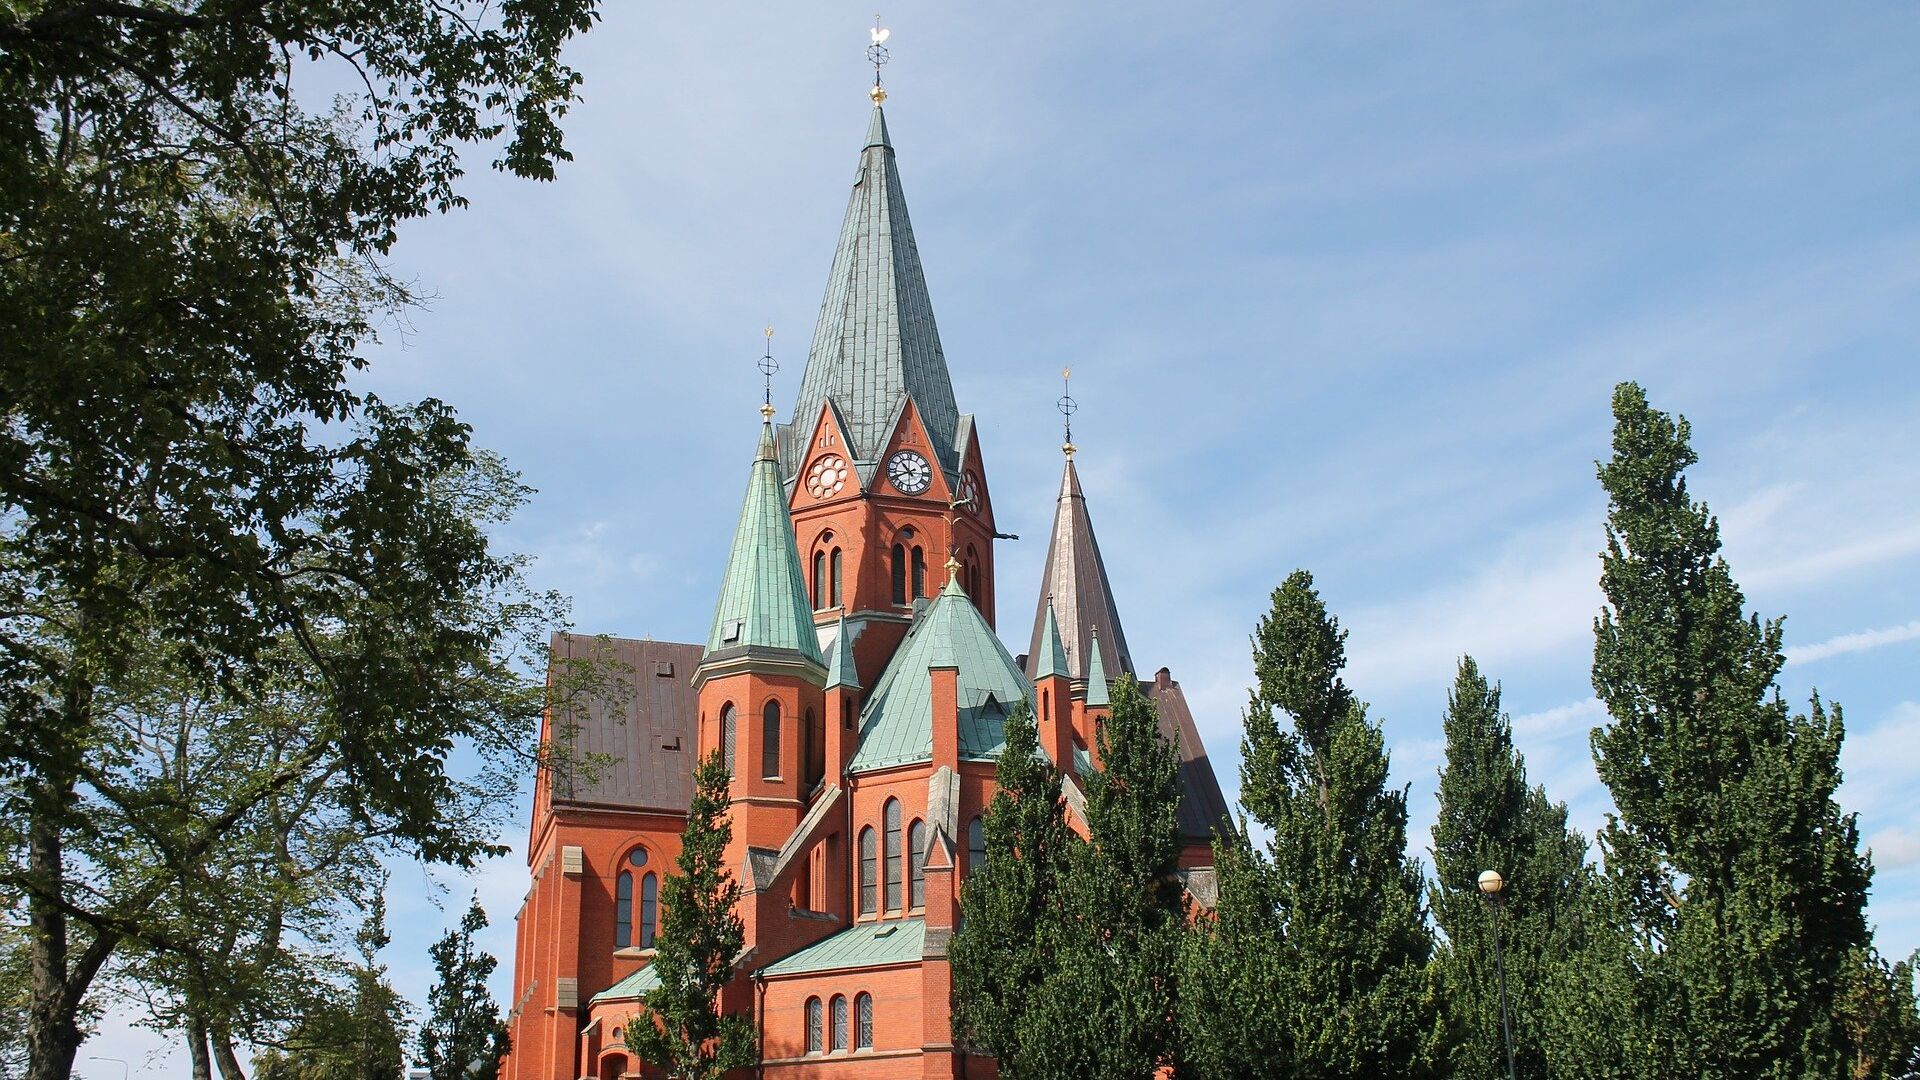 Church in Sweden - Sputnik International, 1920, 16.09.2021